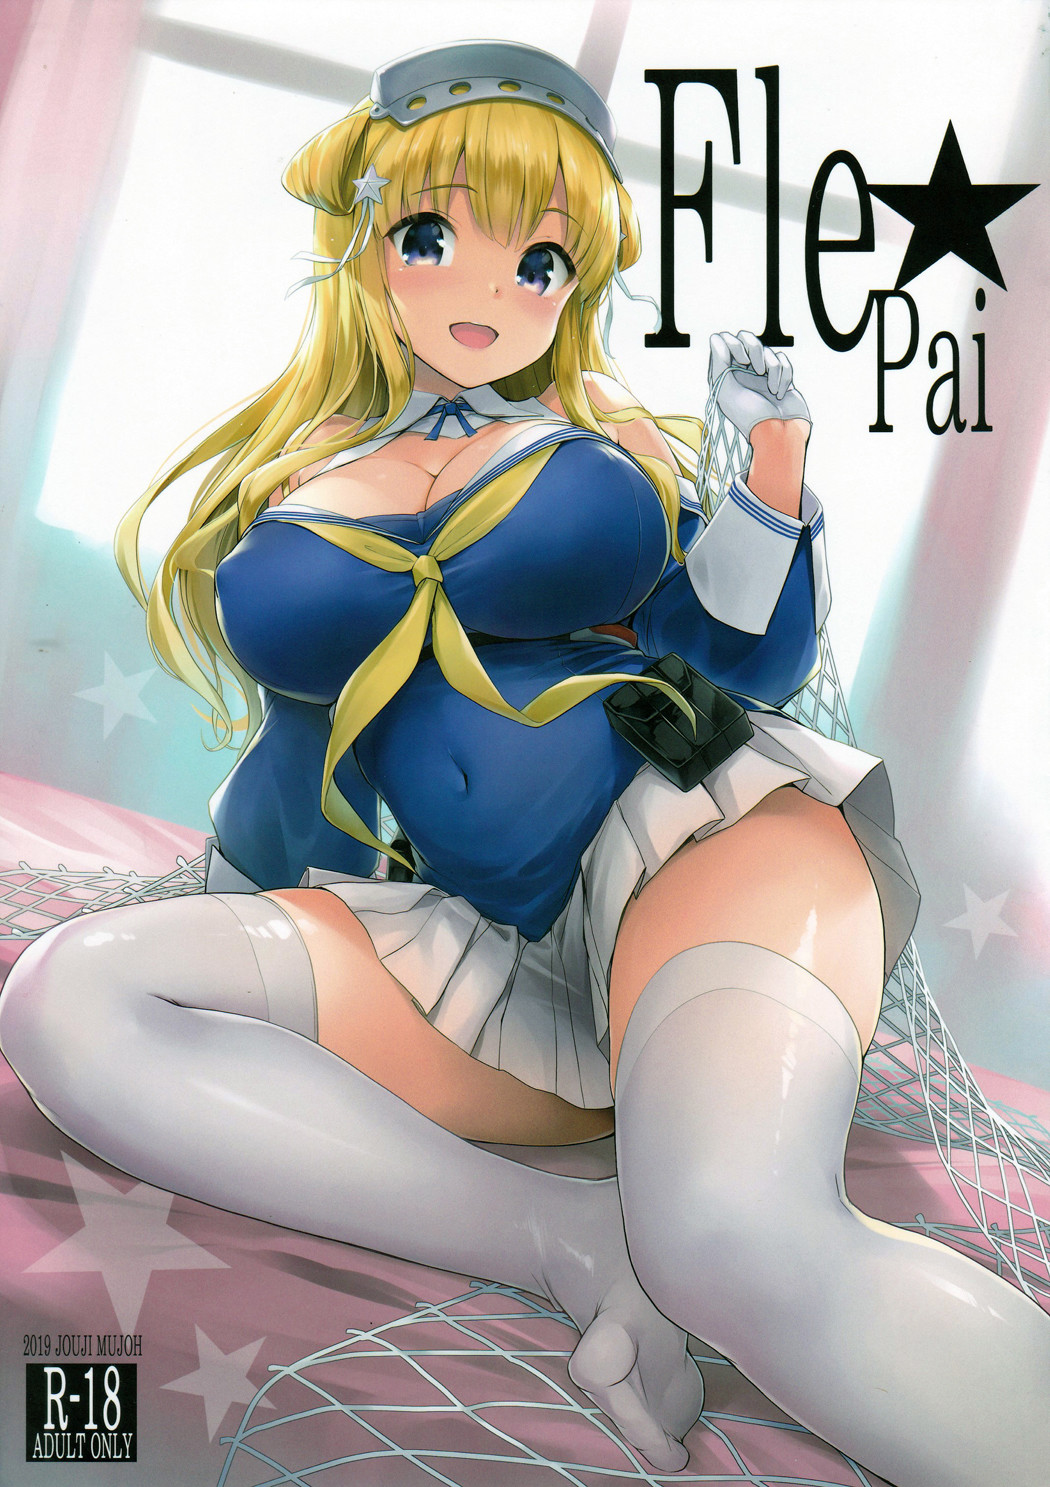 Hentai Manga Comic-Fle★Pai + C97 Bonus Booklet-Read-1